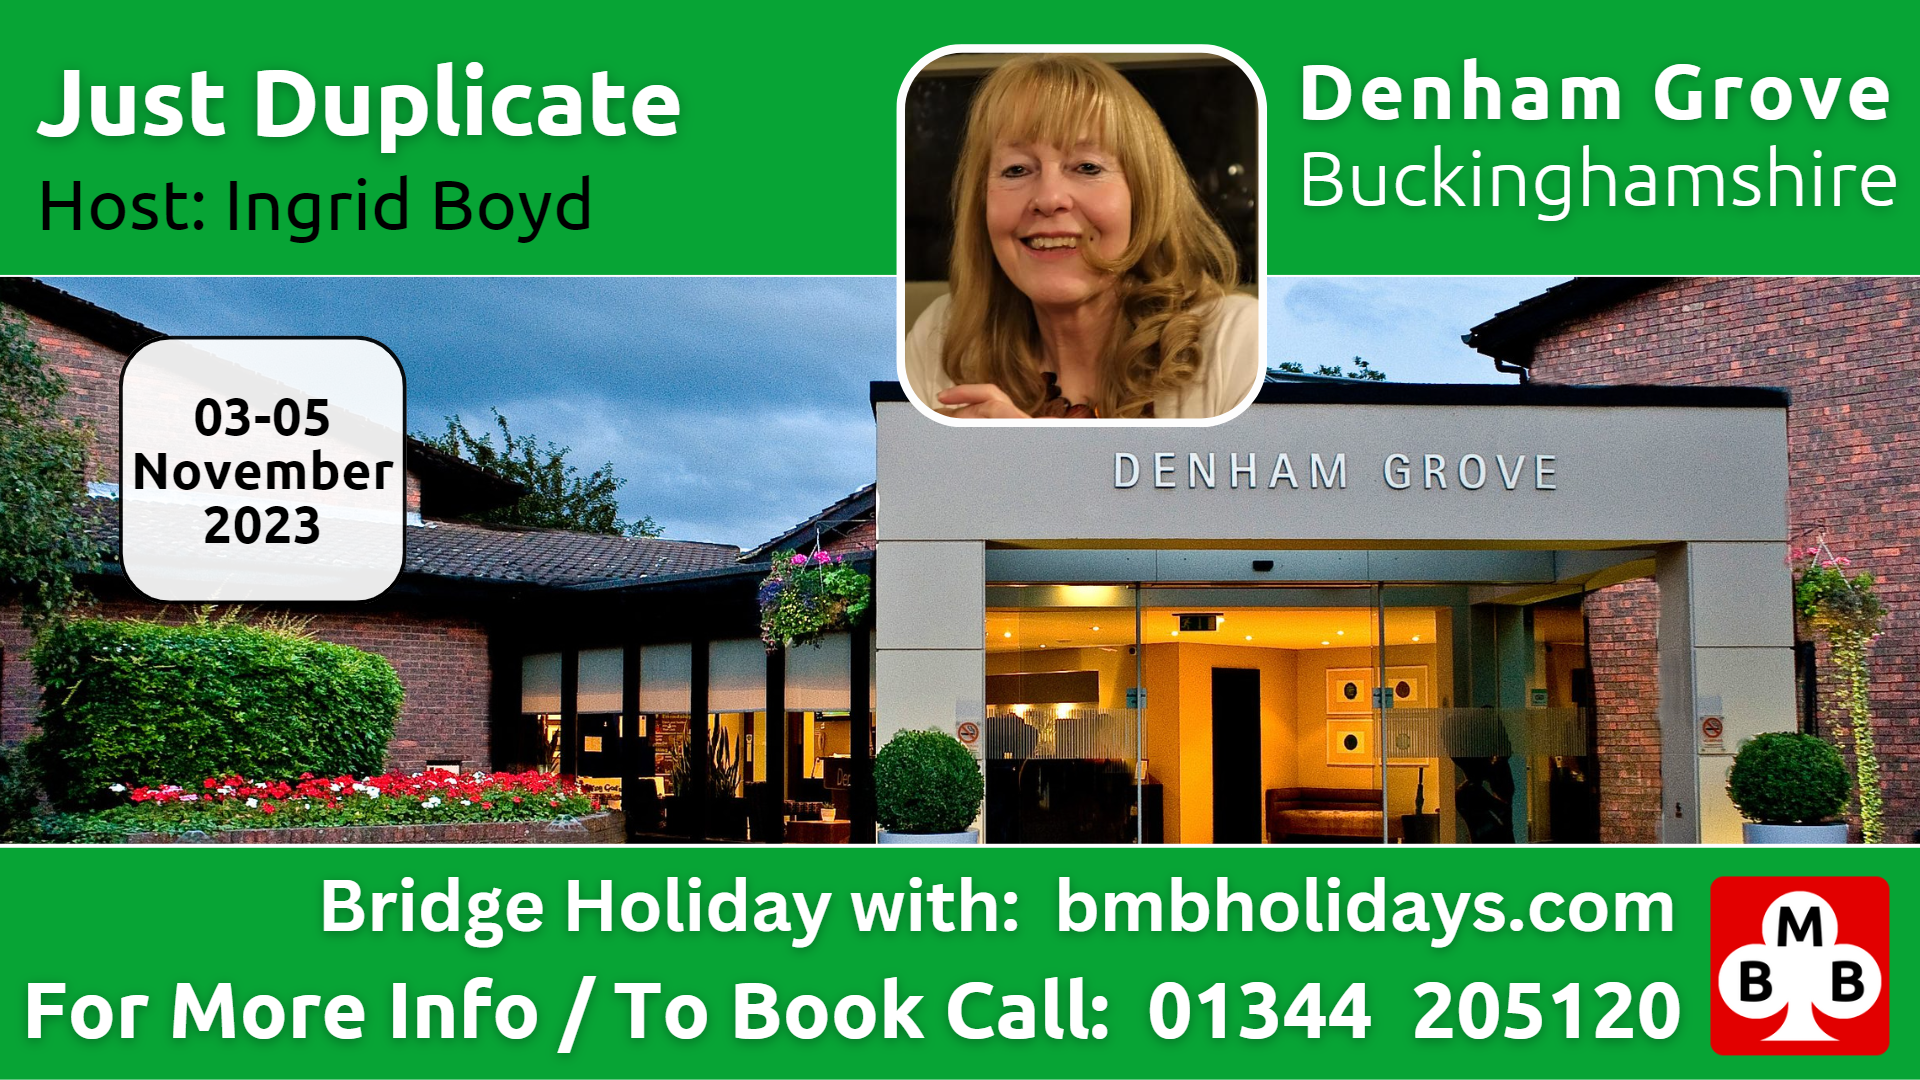 BMB UK Bridge Holiday - Just Duplicate hosted by Ingrid Boyd - Nov 2023